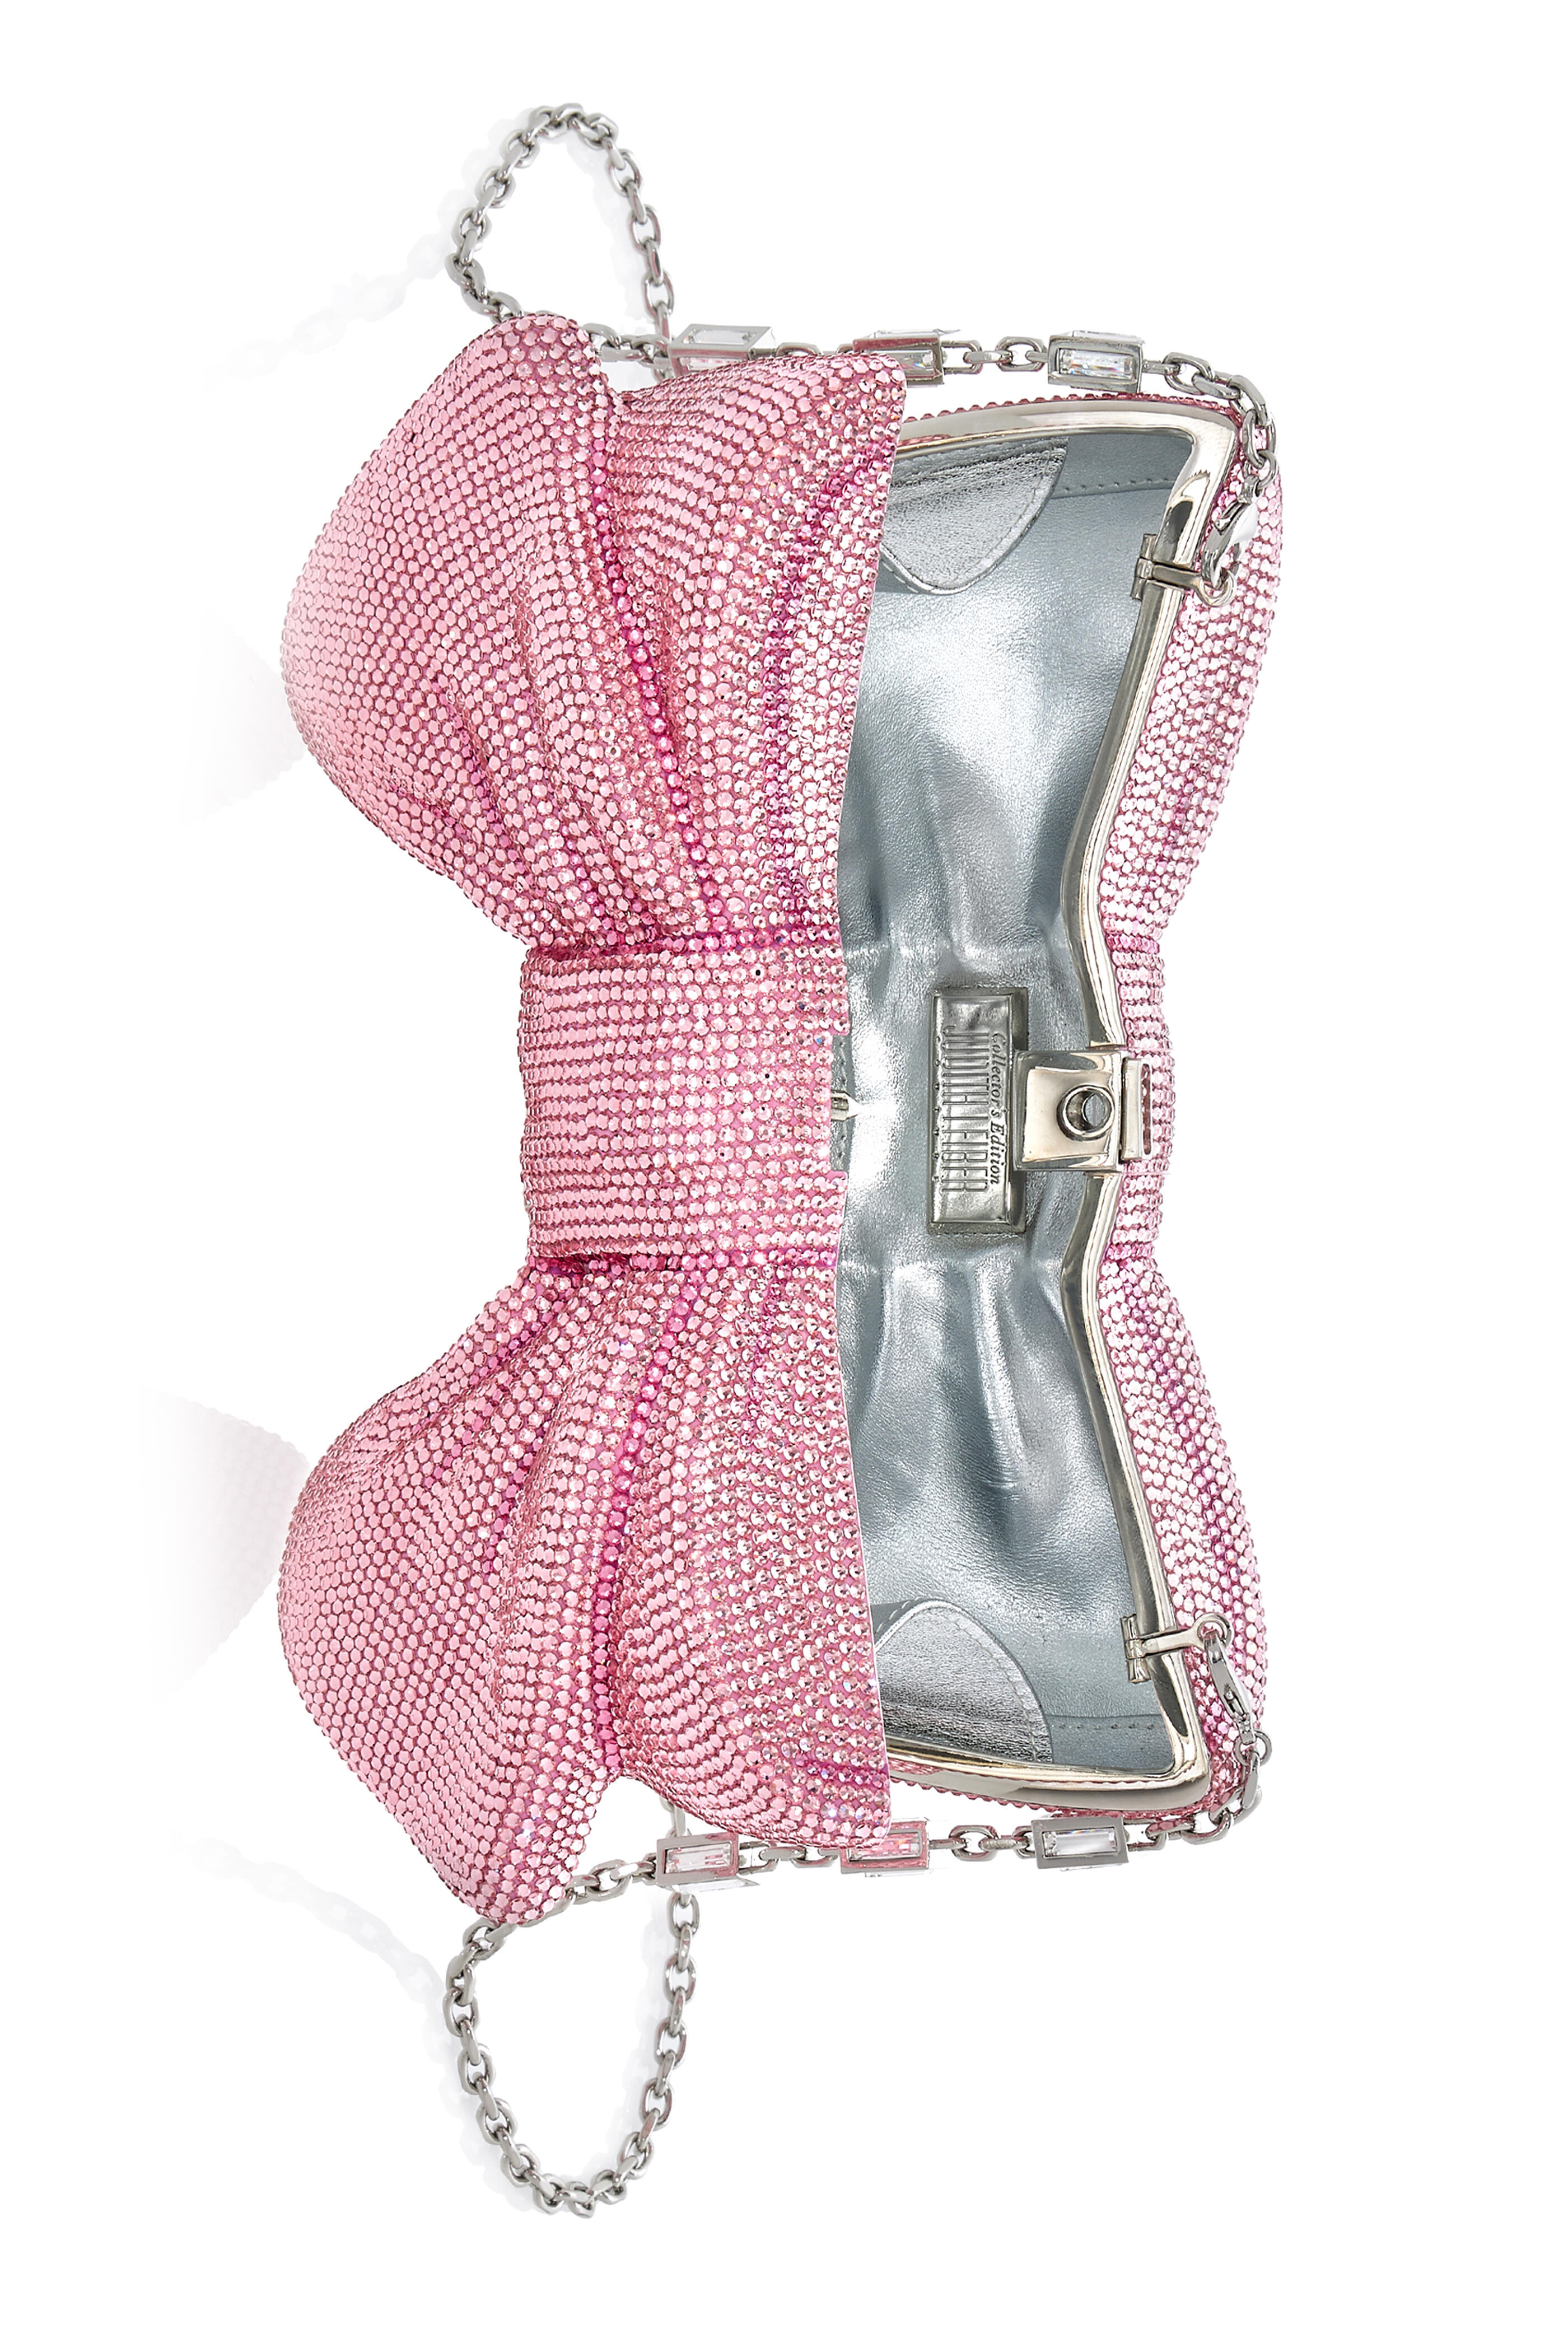 JUDITH LEIBER COUTURE - Rose metal clutch bag